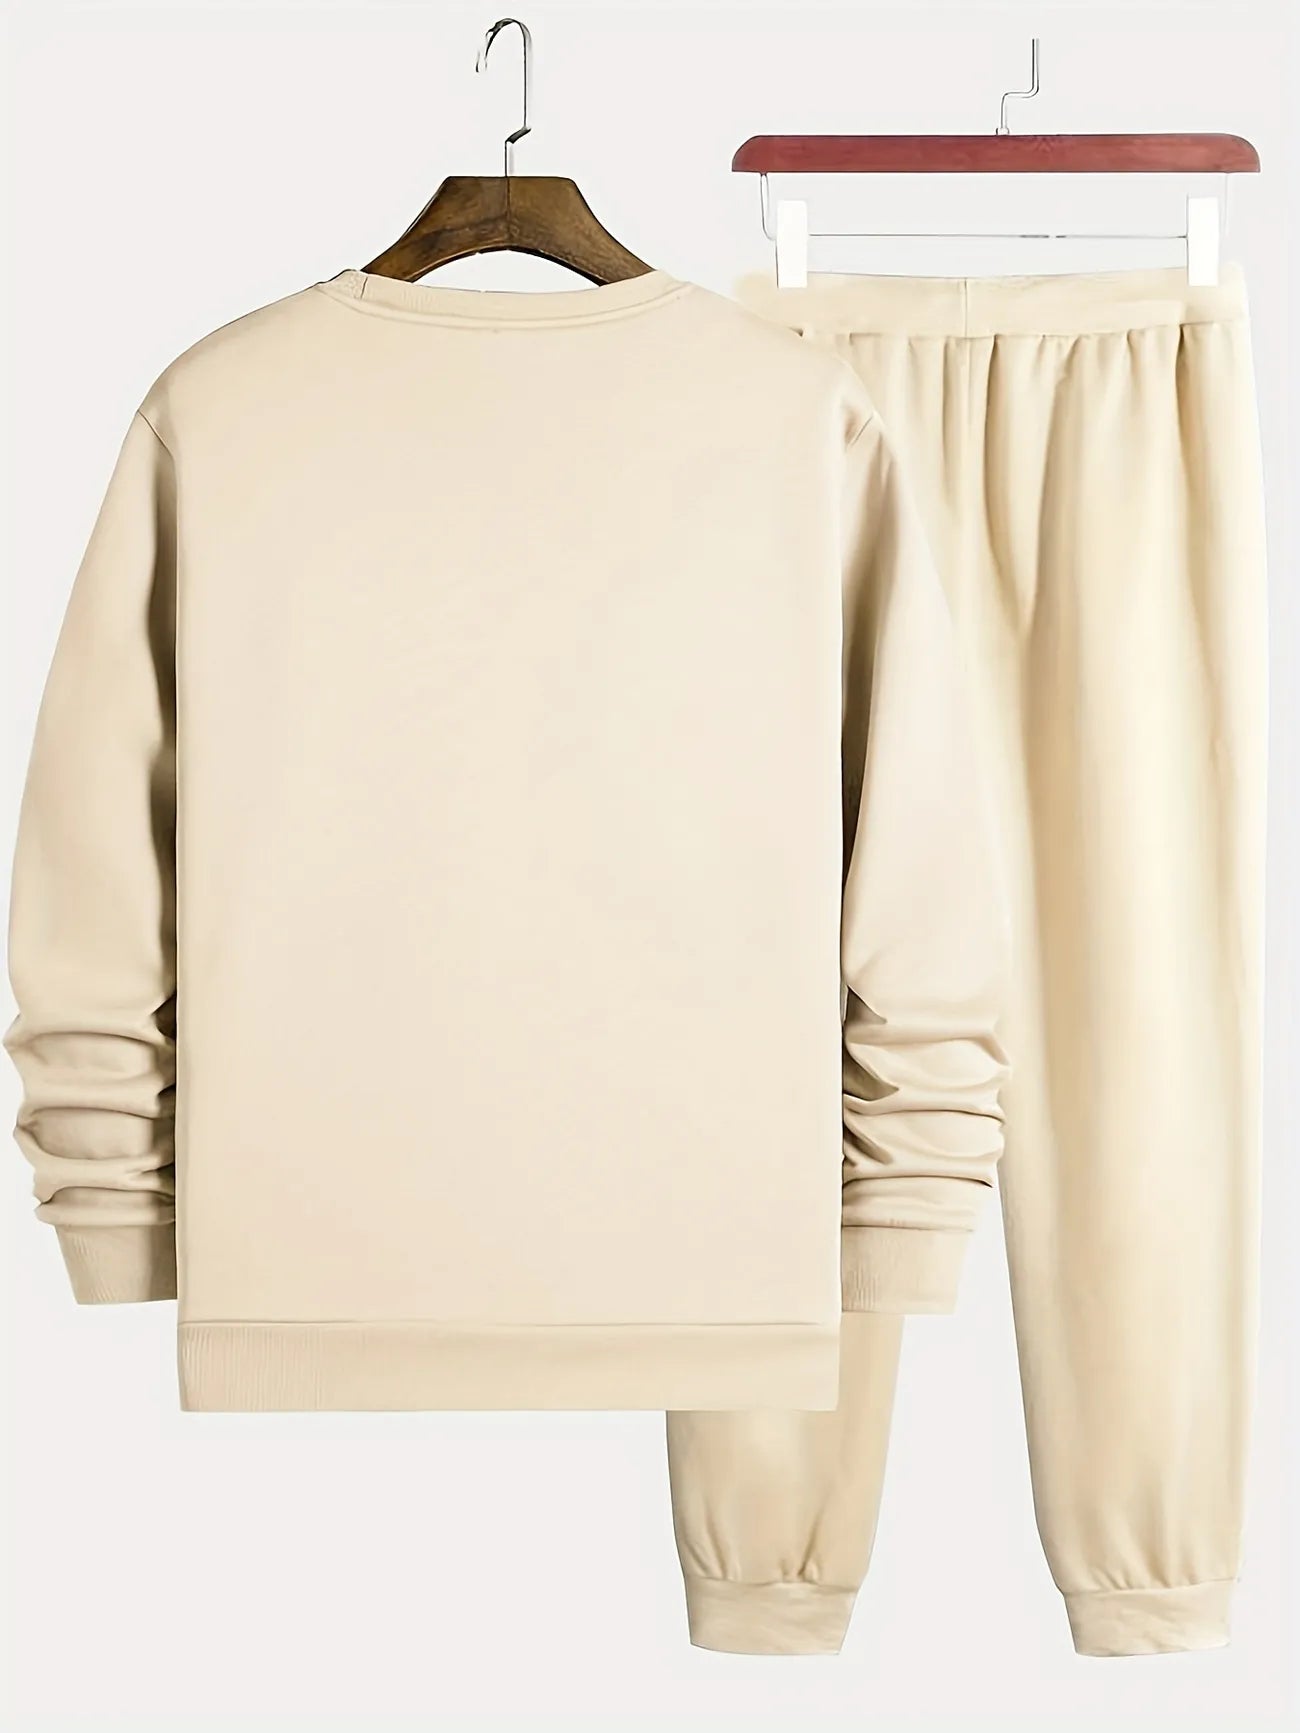 Mens Sweatshirt and Pants Set by Tee Tall - MSPSTT8 - Cream Cream